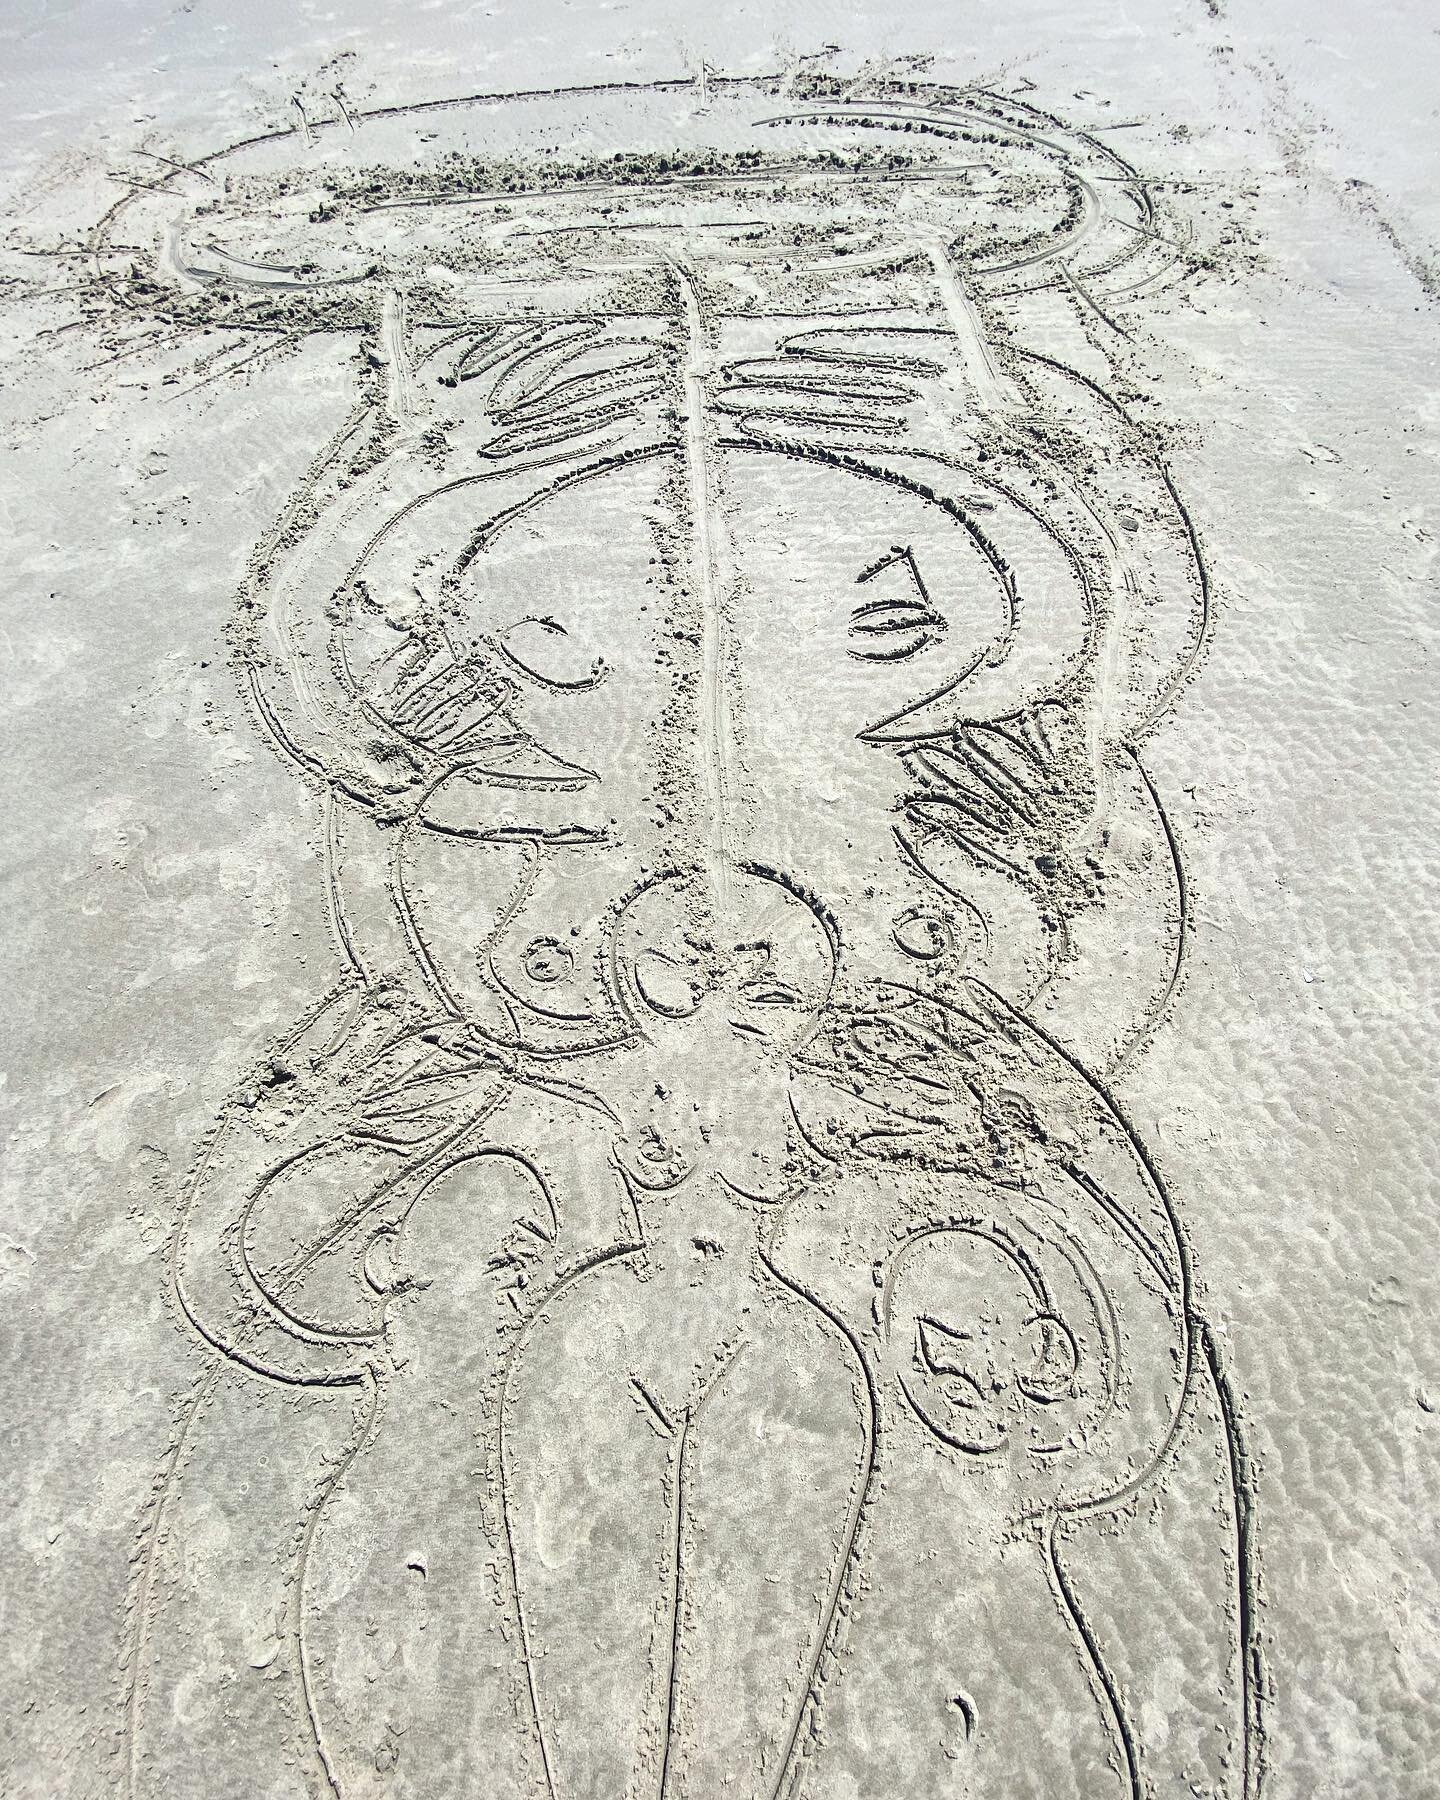 Beach drawing 🐚🌊 from yesterday&rsquo;s video 👩&zwj;👩&zwj;👧&zwj;👦👩&zwj;👧&zwj;👦
Can you see what&rsquo;s going on?

昨日のビデオで砂に描いていた絵🌞
_____________________________
 #mindfulness #emergingartist #yayoikusama #queerart #callforartists #selfgrow